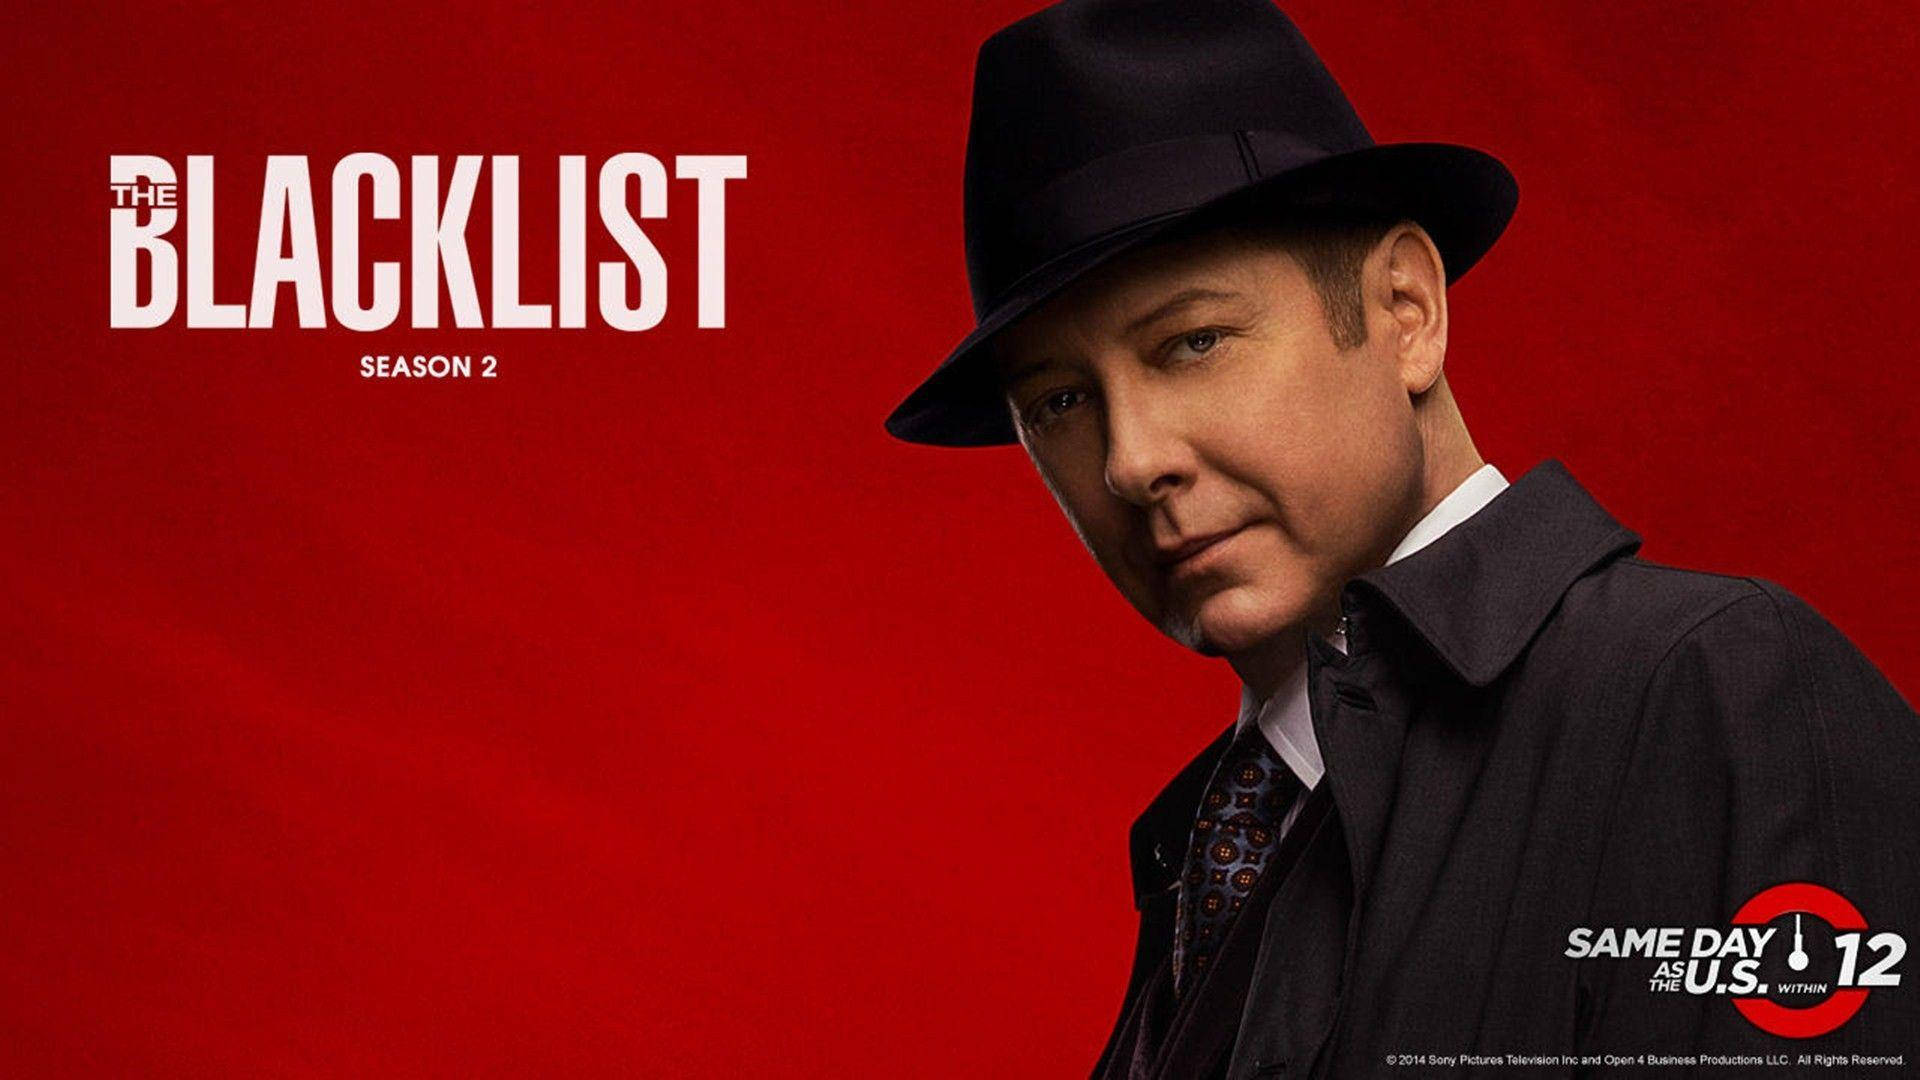 "James Spader shines as criminal mastermind Raymond 'Red' Reddington in The Blacklist." Wallpaper